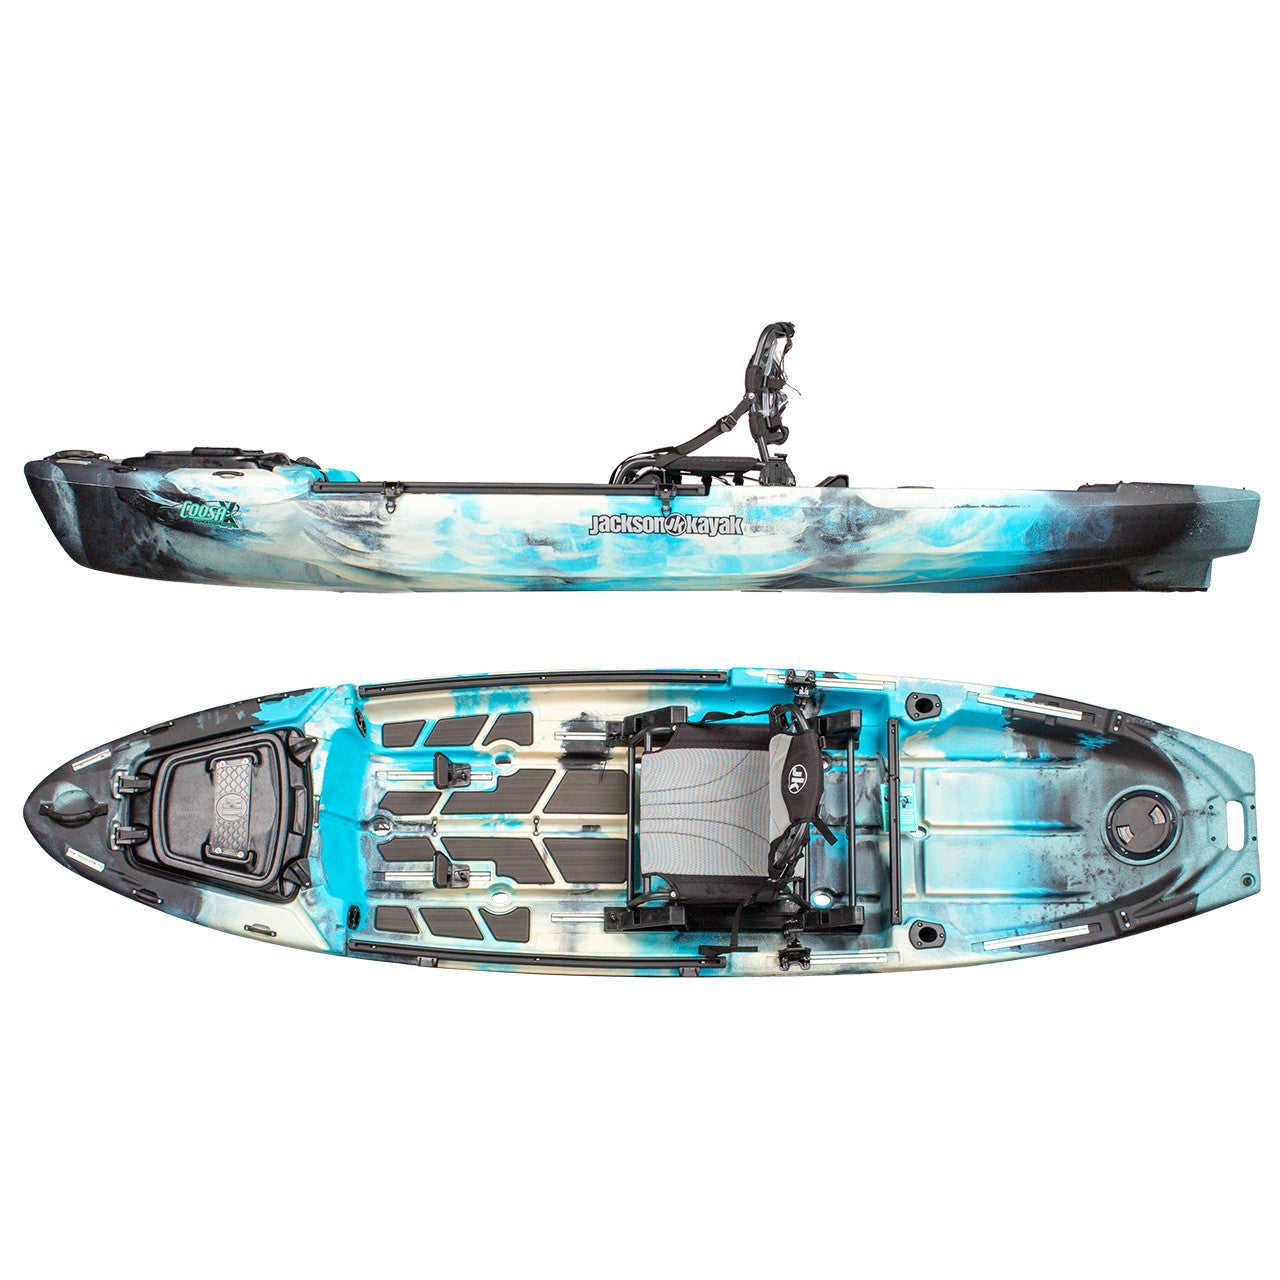 A blue and white river fishing kayak designed by Jackson Kayak Coosa X 11'8.